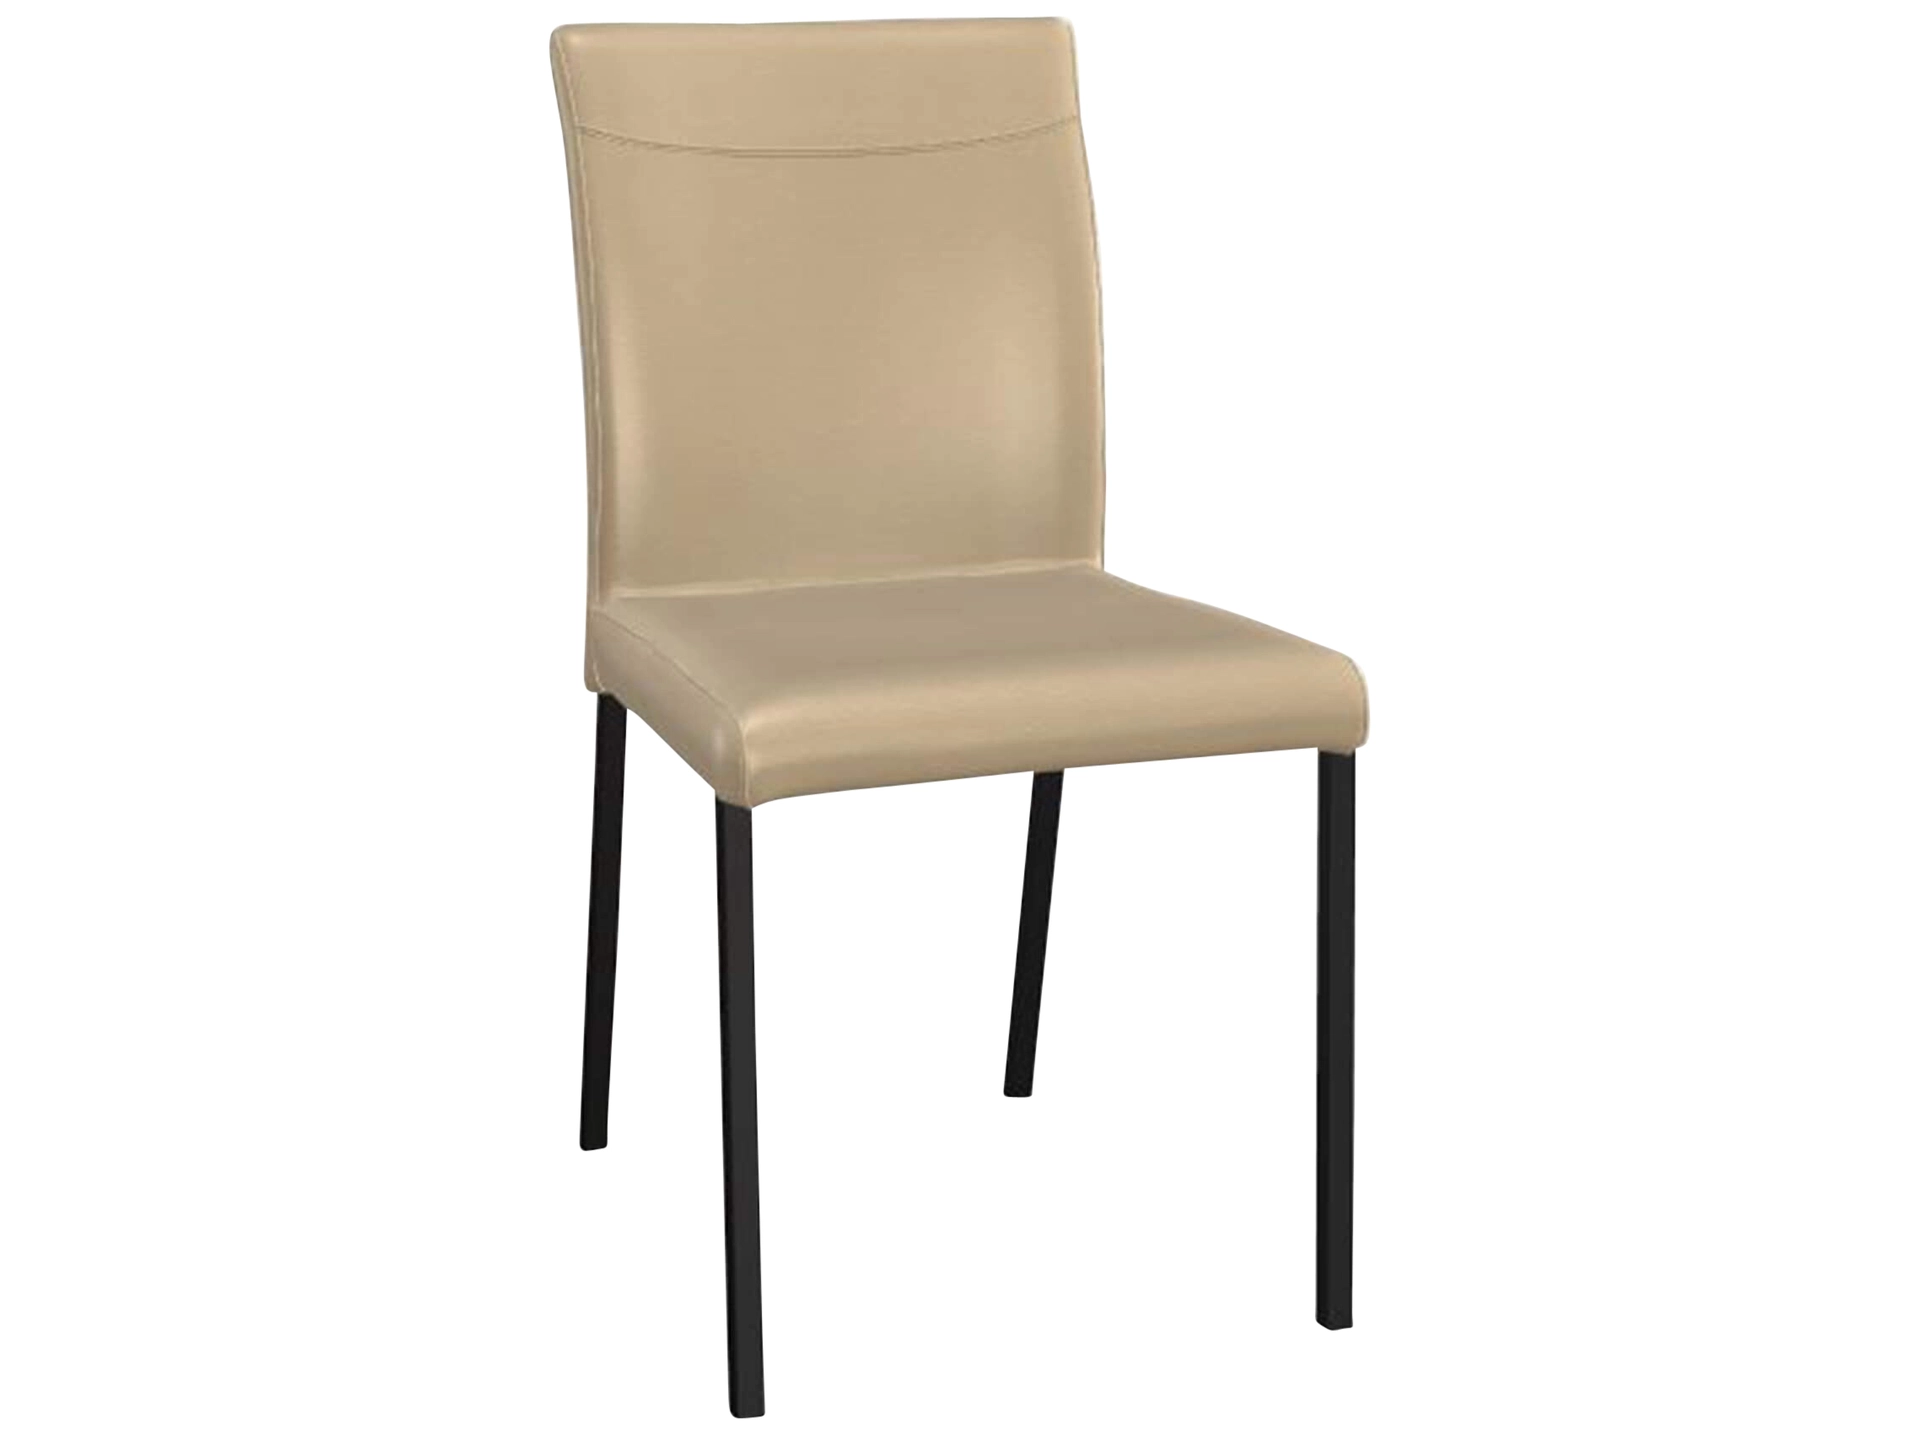 Stuhl Leicht Premium Trendstühle / Farbe: Betulla / Material: Leder